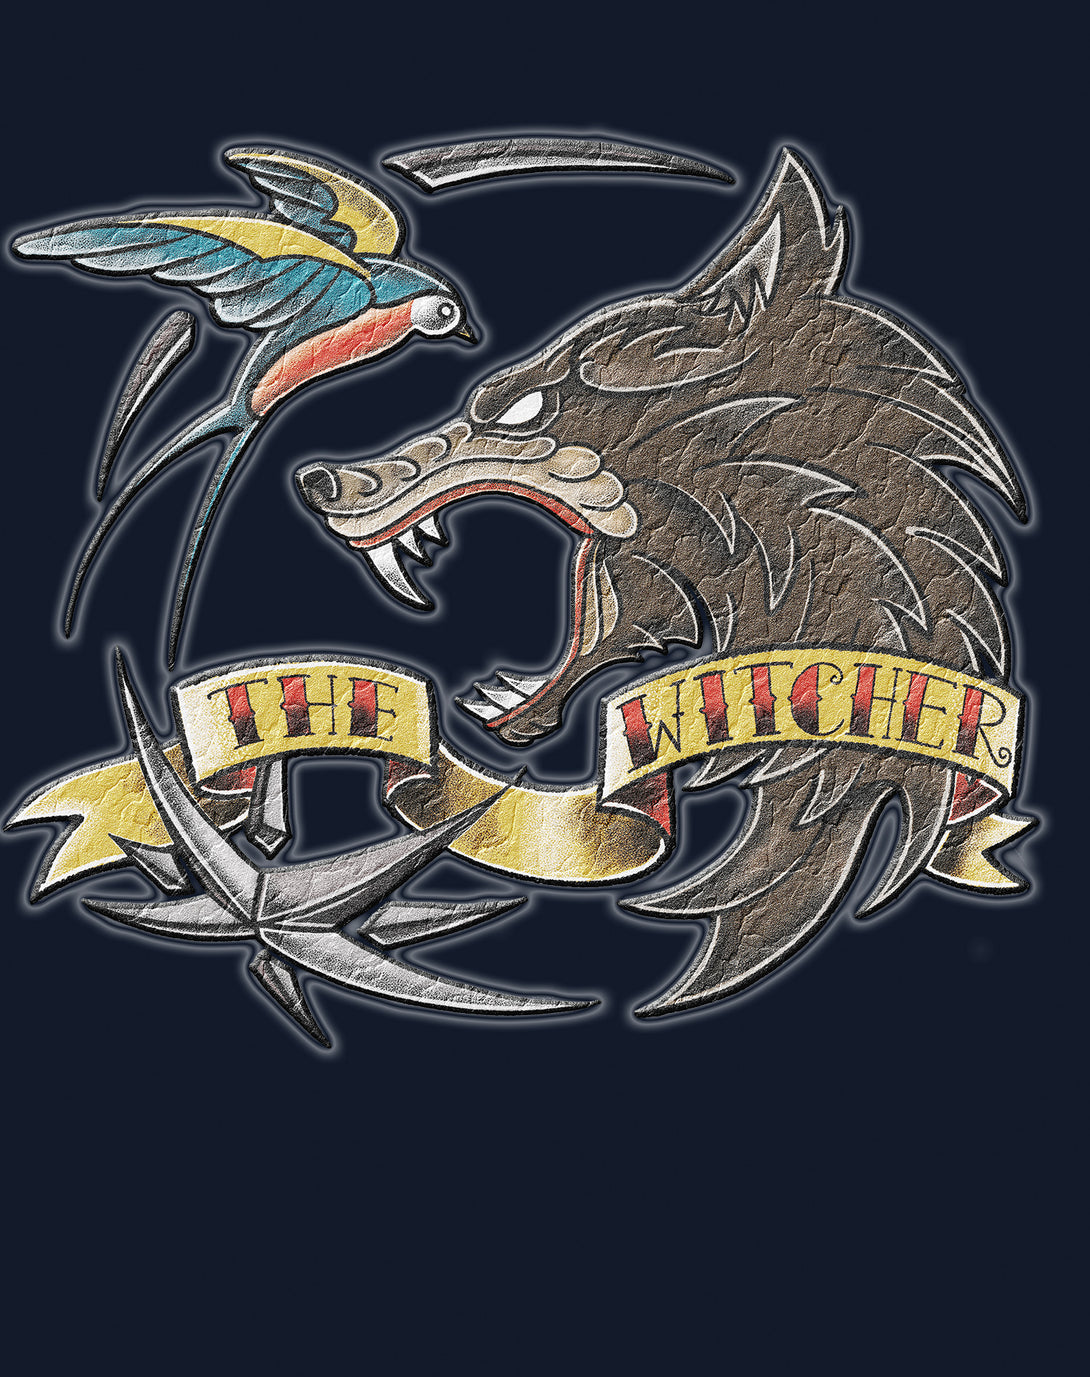 The Witcher Logo Tattoo Wolf Official Men's T-Shirt Navy - Urban Species Design Close Up